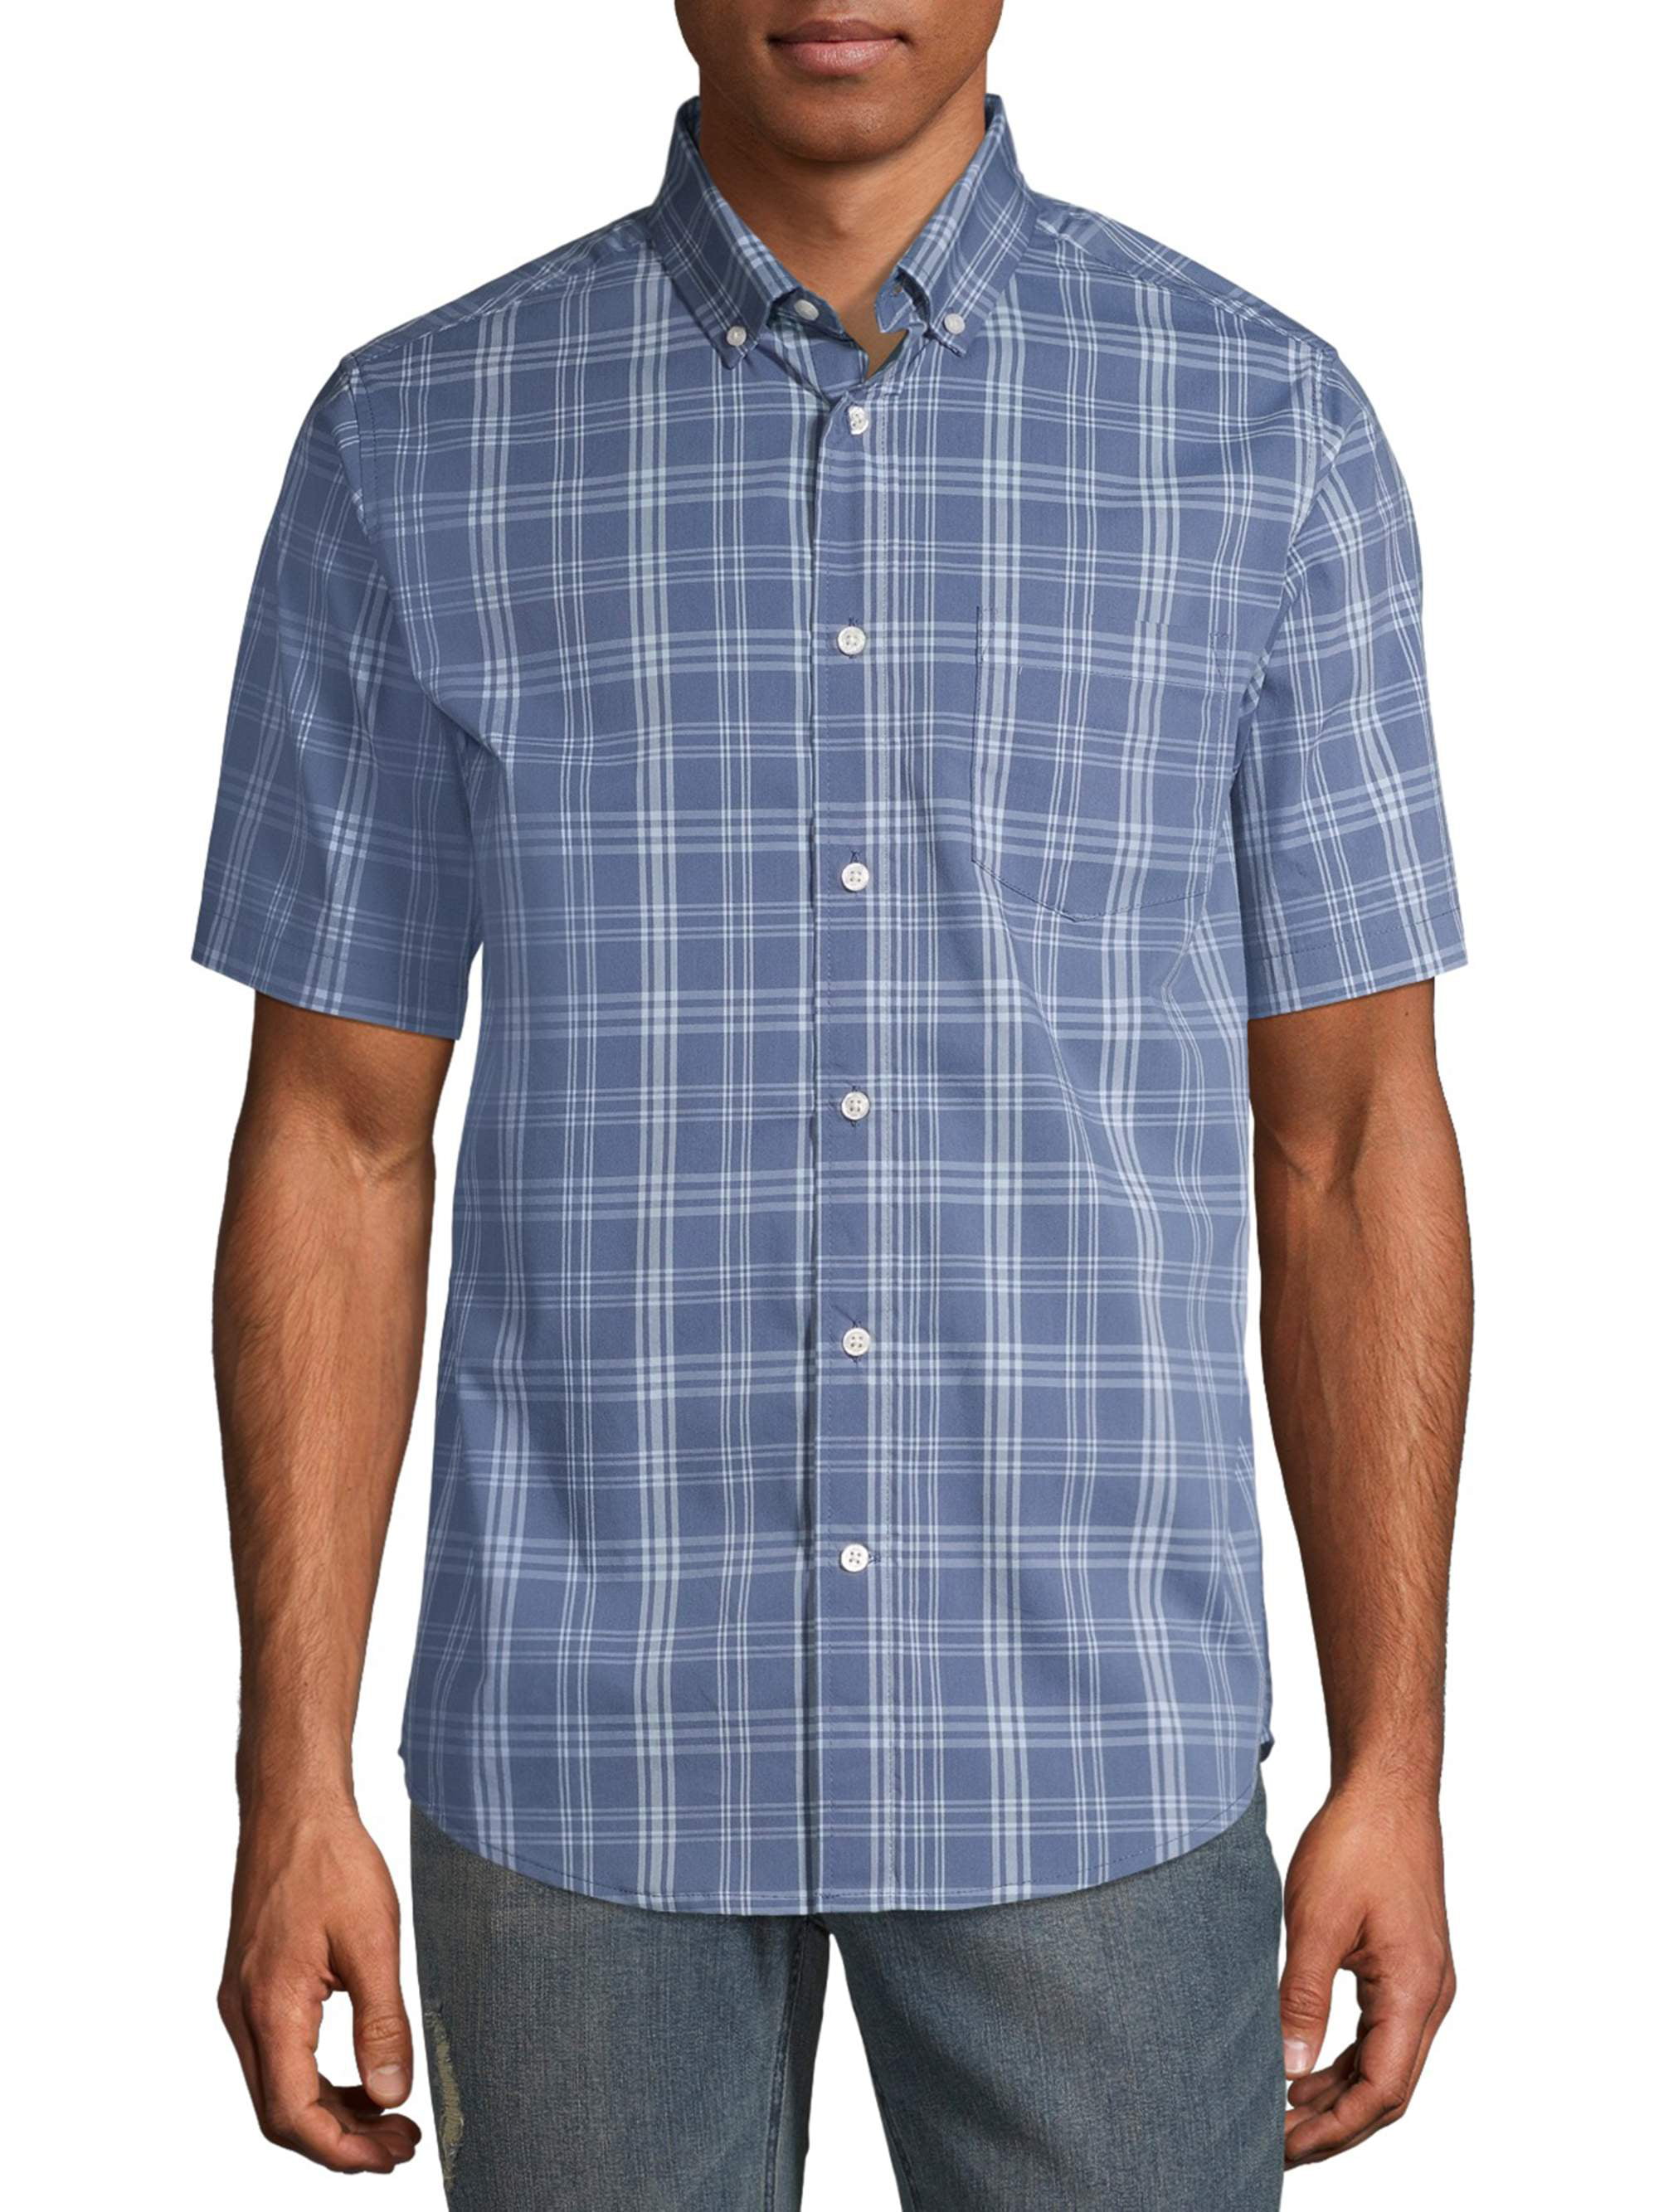 George Men's and Big Men's Plaid Poplin Short Sleeve Shirt - Walmart.com